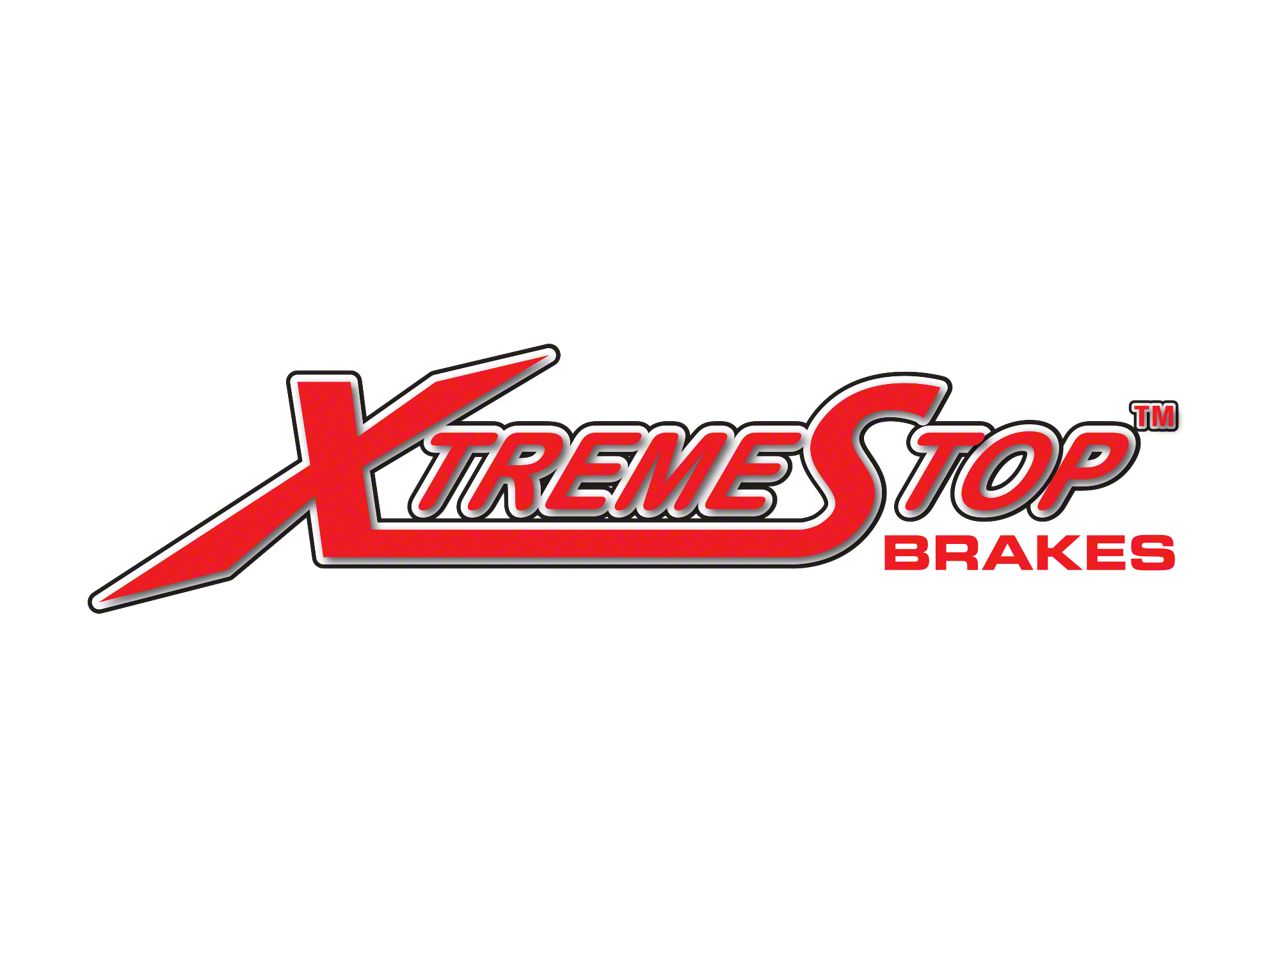 Xtreme Stop Parts